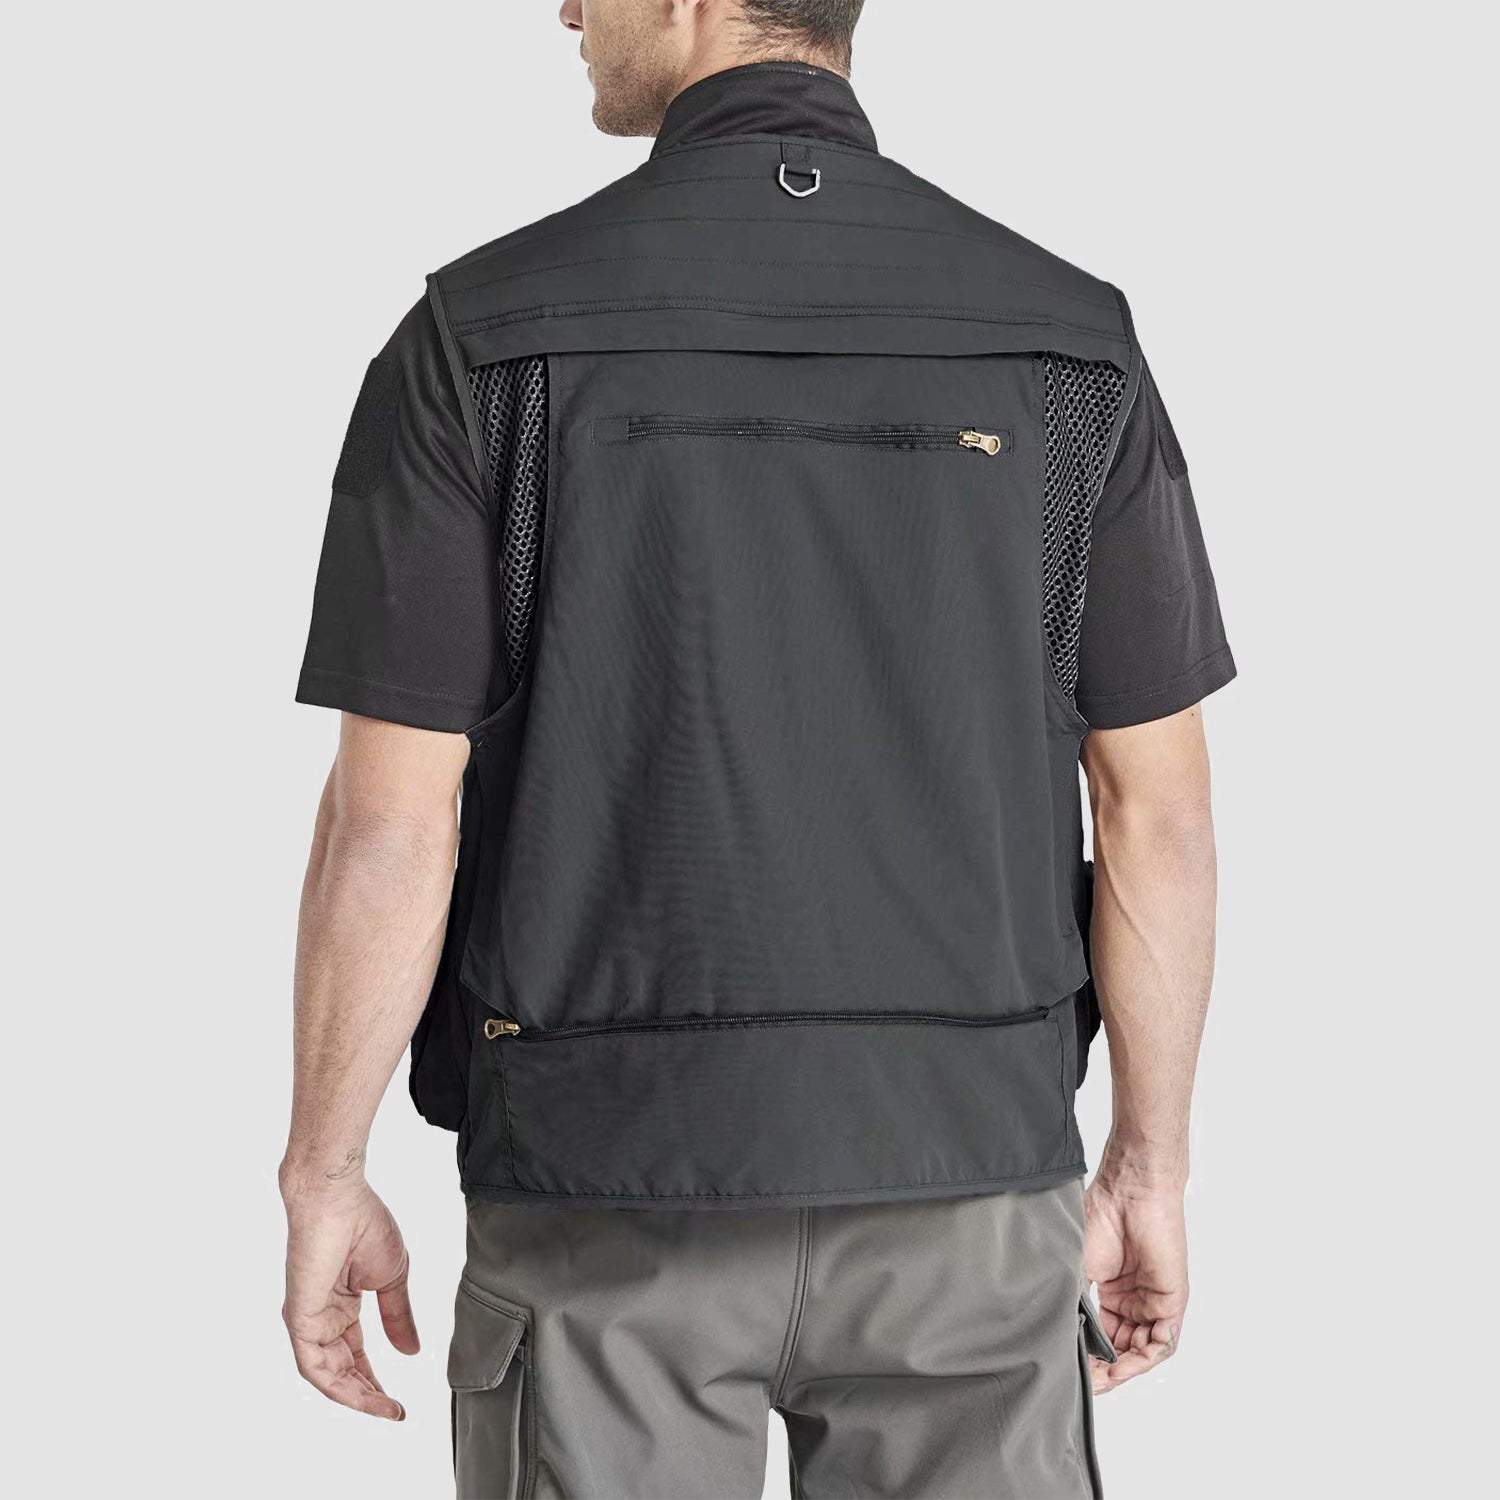 Men Multi Pocket Utility Cargo Vest Waistcoat Fishing Travelling Working  Clothes